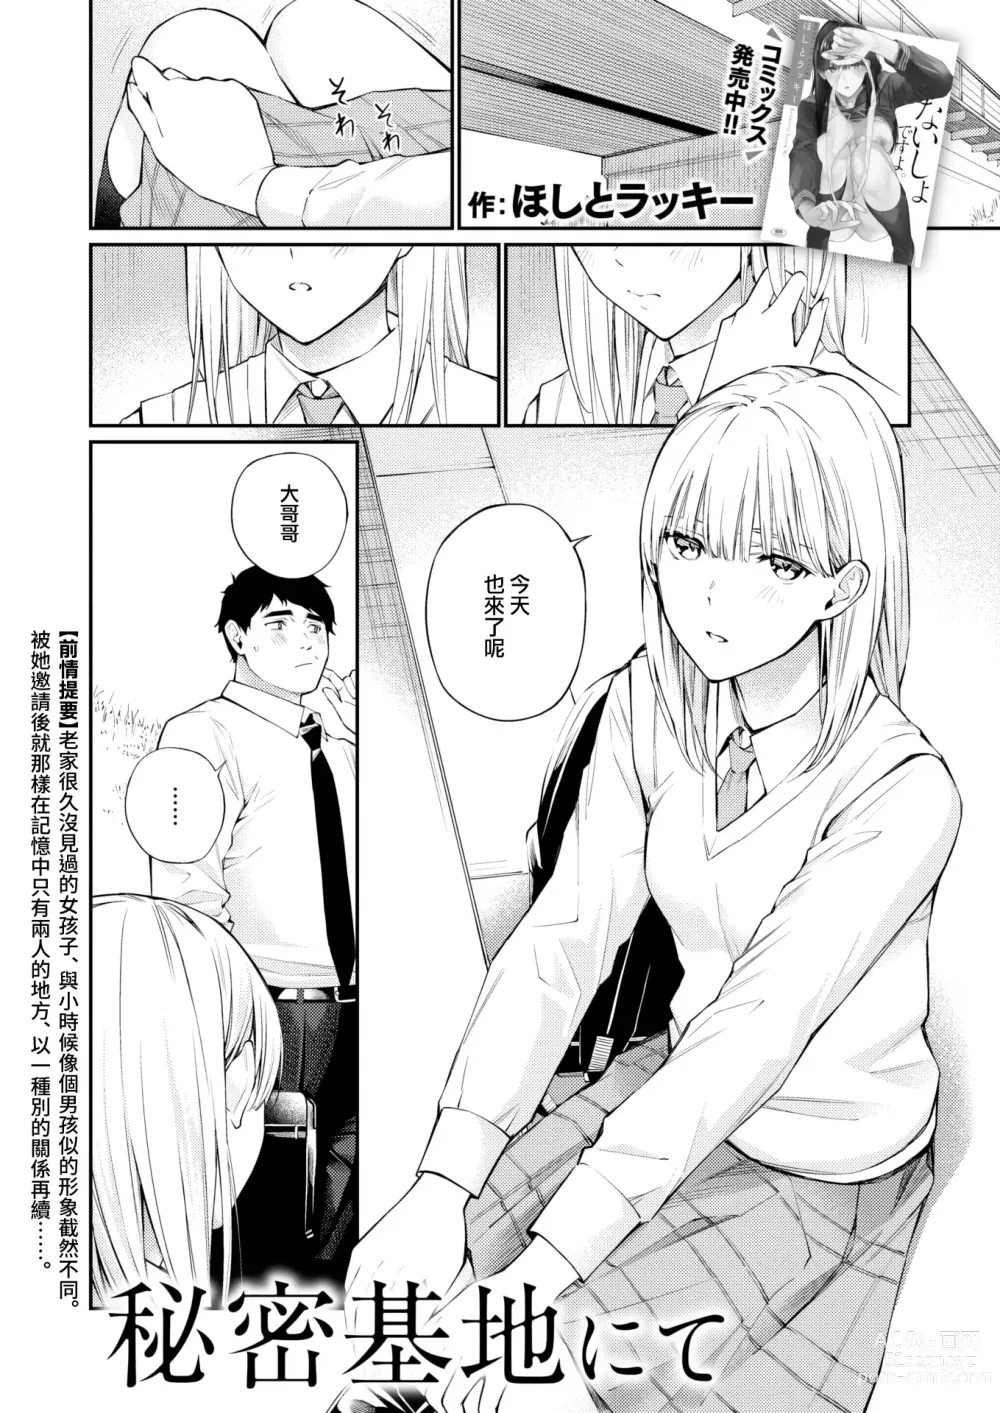 Page 2 of manga Himitsu Kichi Nite